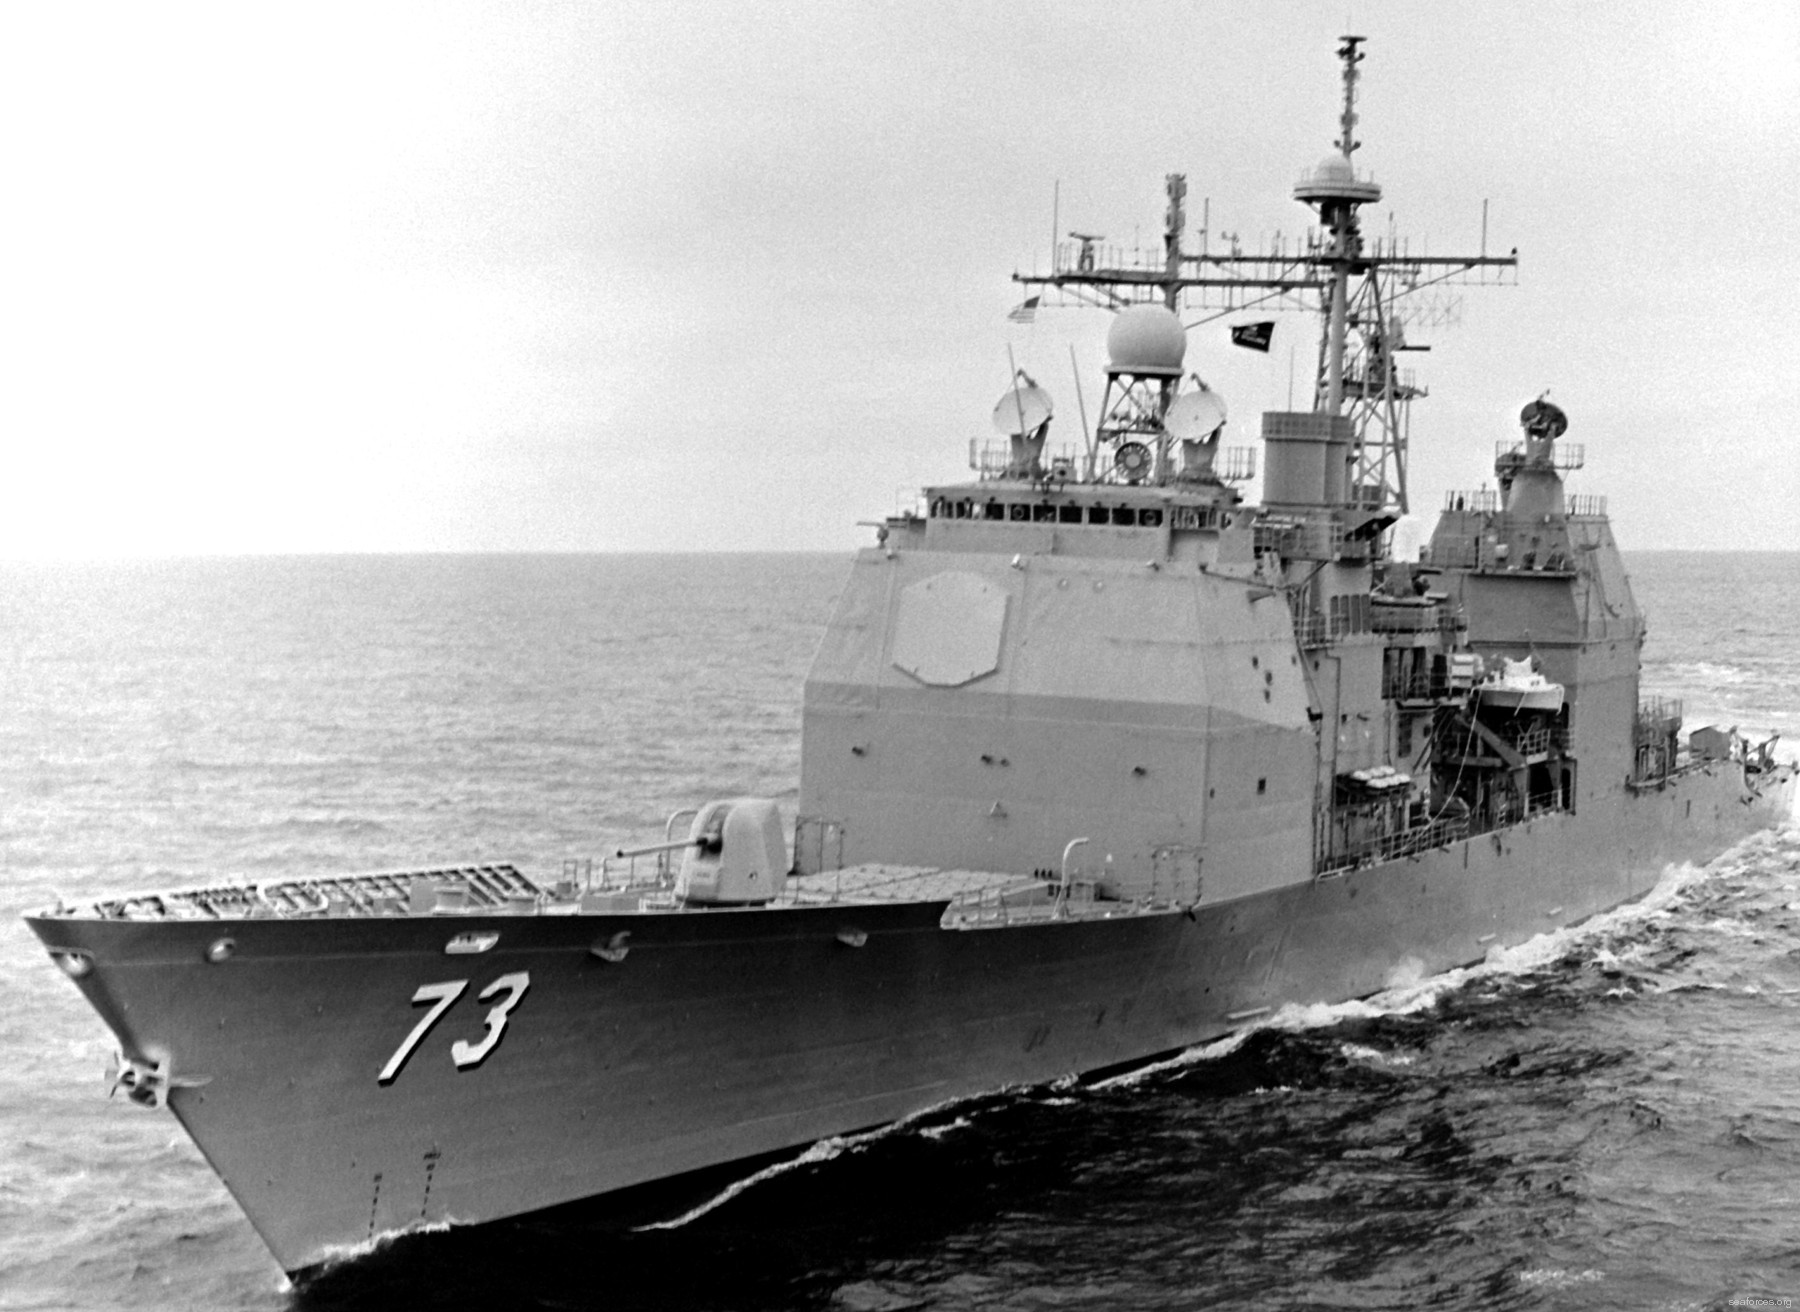 cg-73 uss port royal ticonderoga class guided missile cruiser navy 46